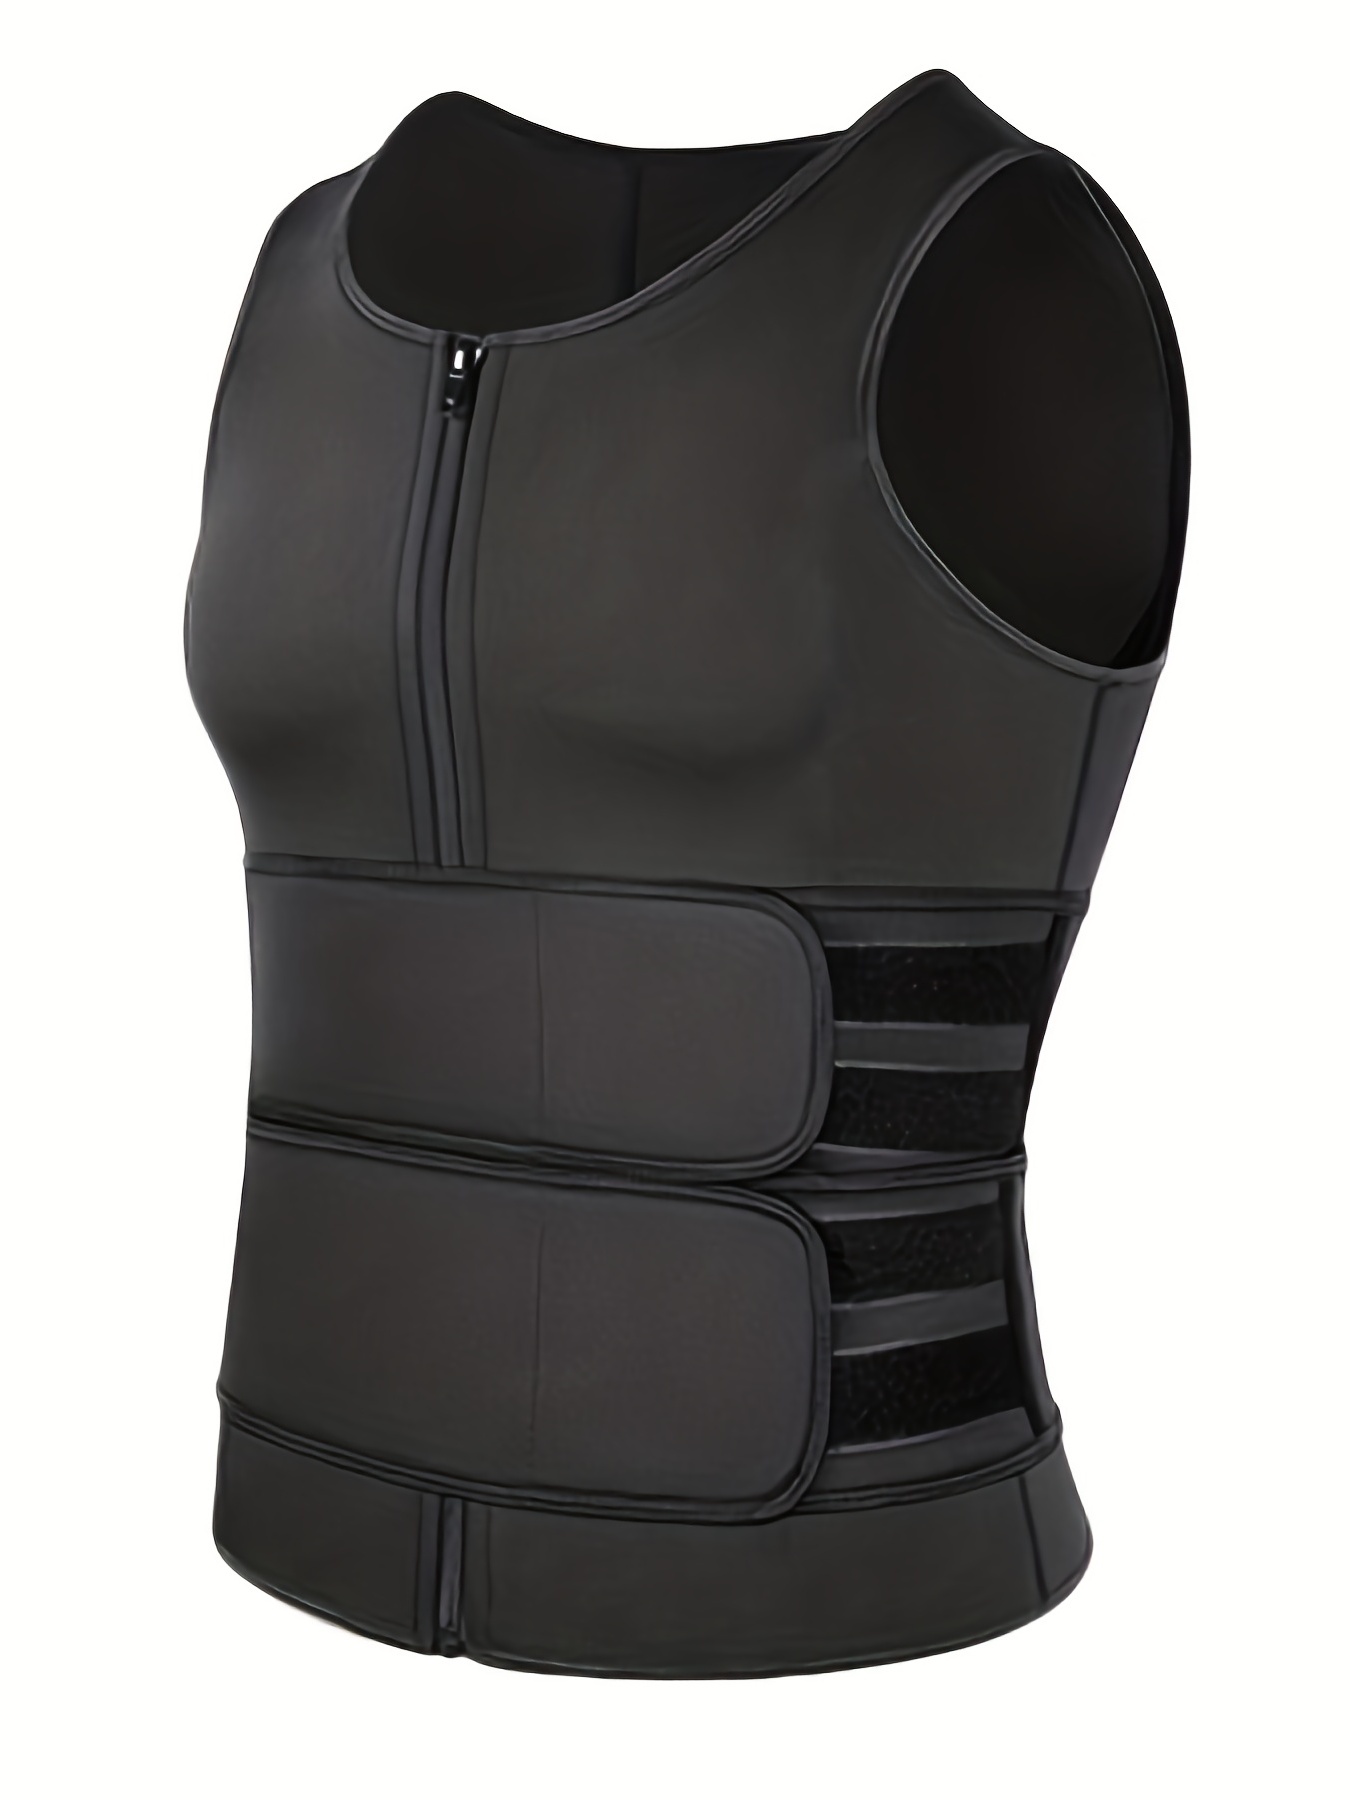 BODYSUNER Sauna Sweat Vest Workout Tank Top Waist Trainer for Men  Compression Workout Enhancing Vest With Zipper Blue L/XL